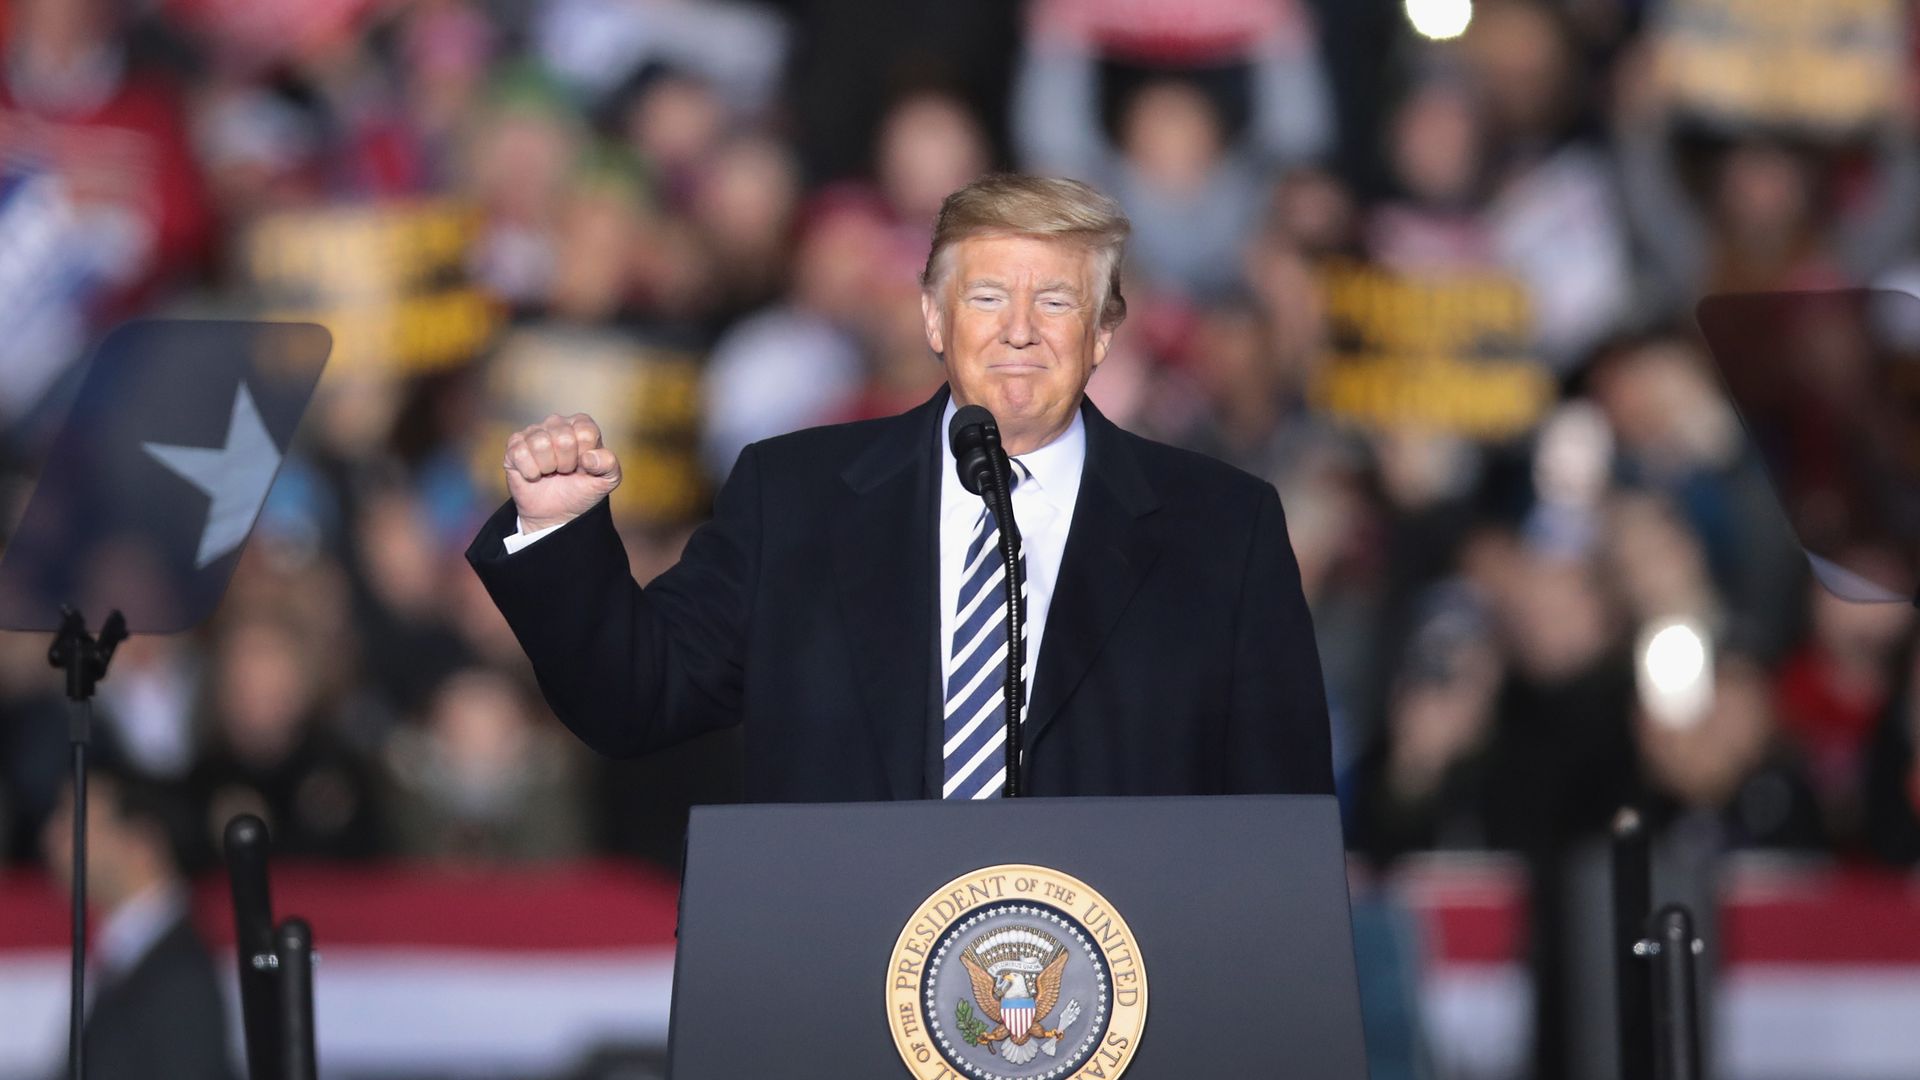 Donald trump behind the podium at a rally. 